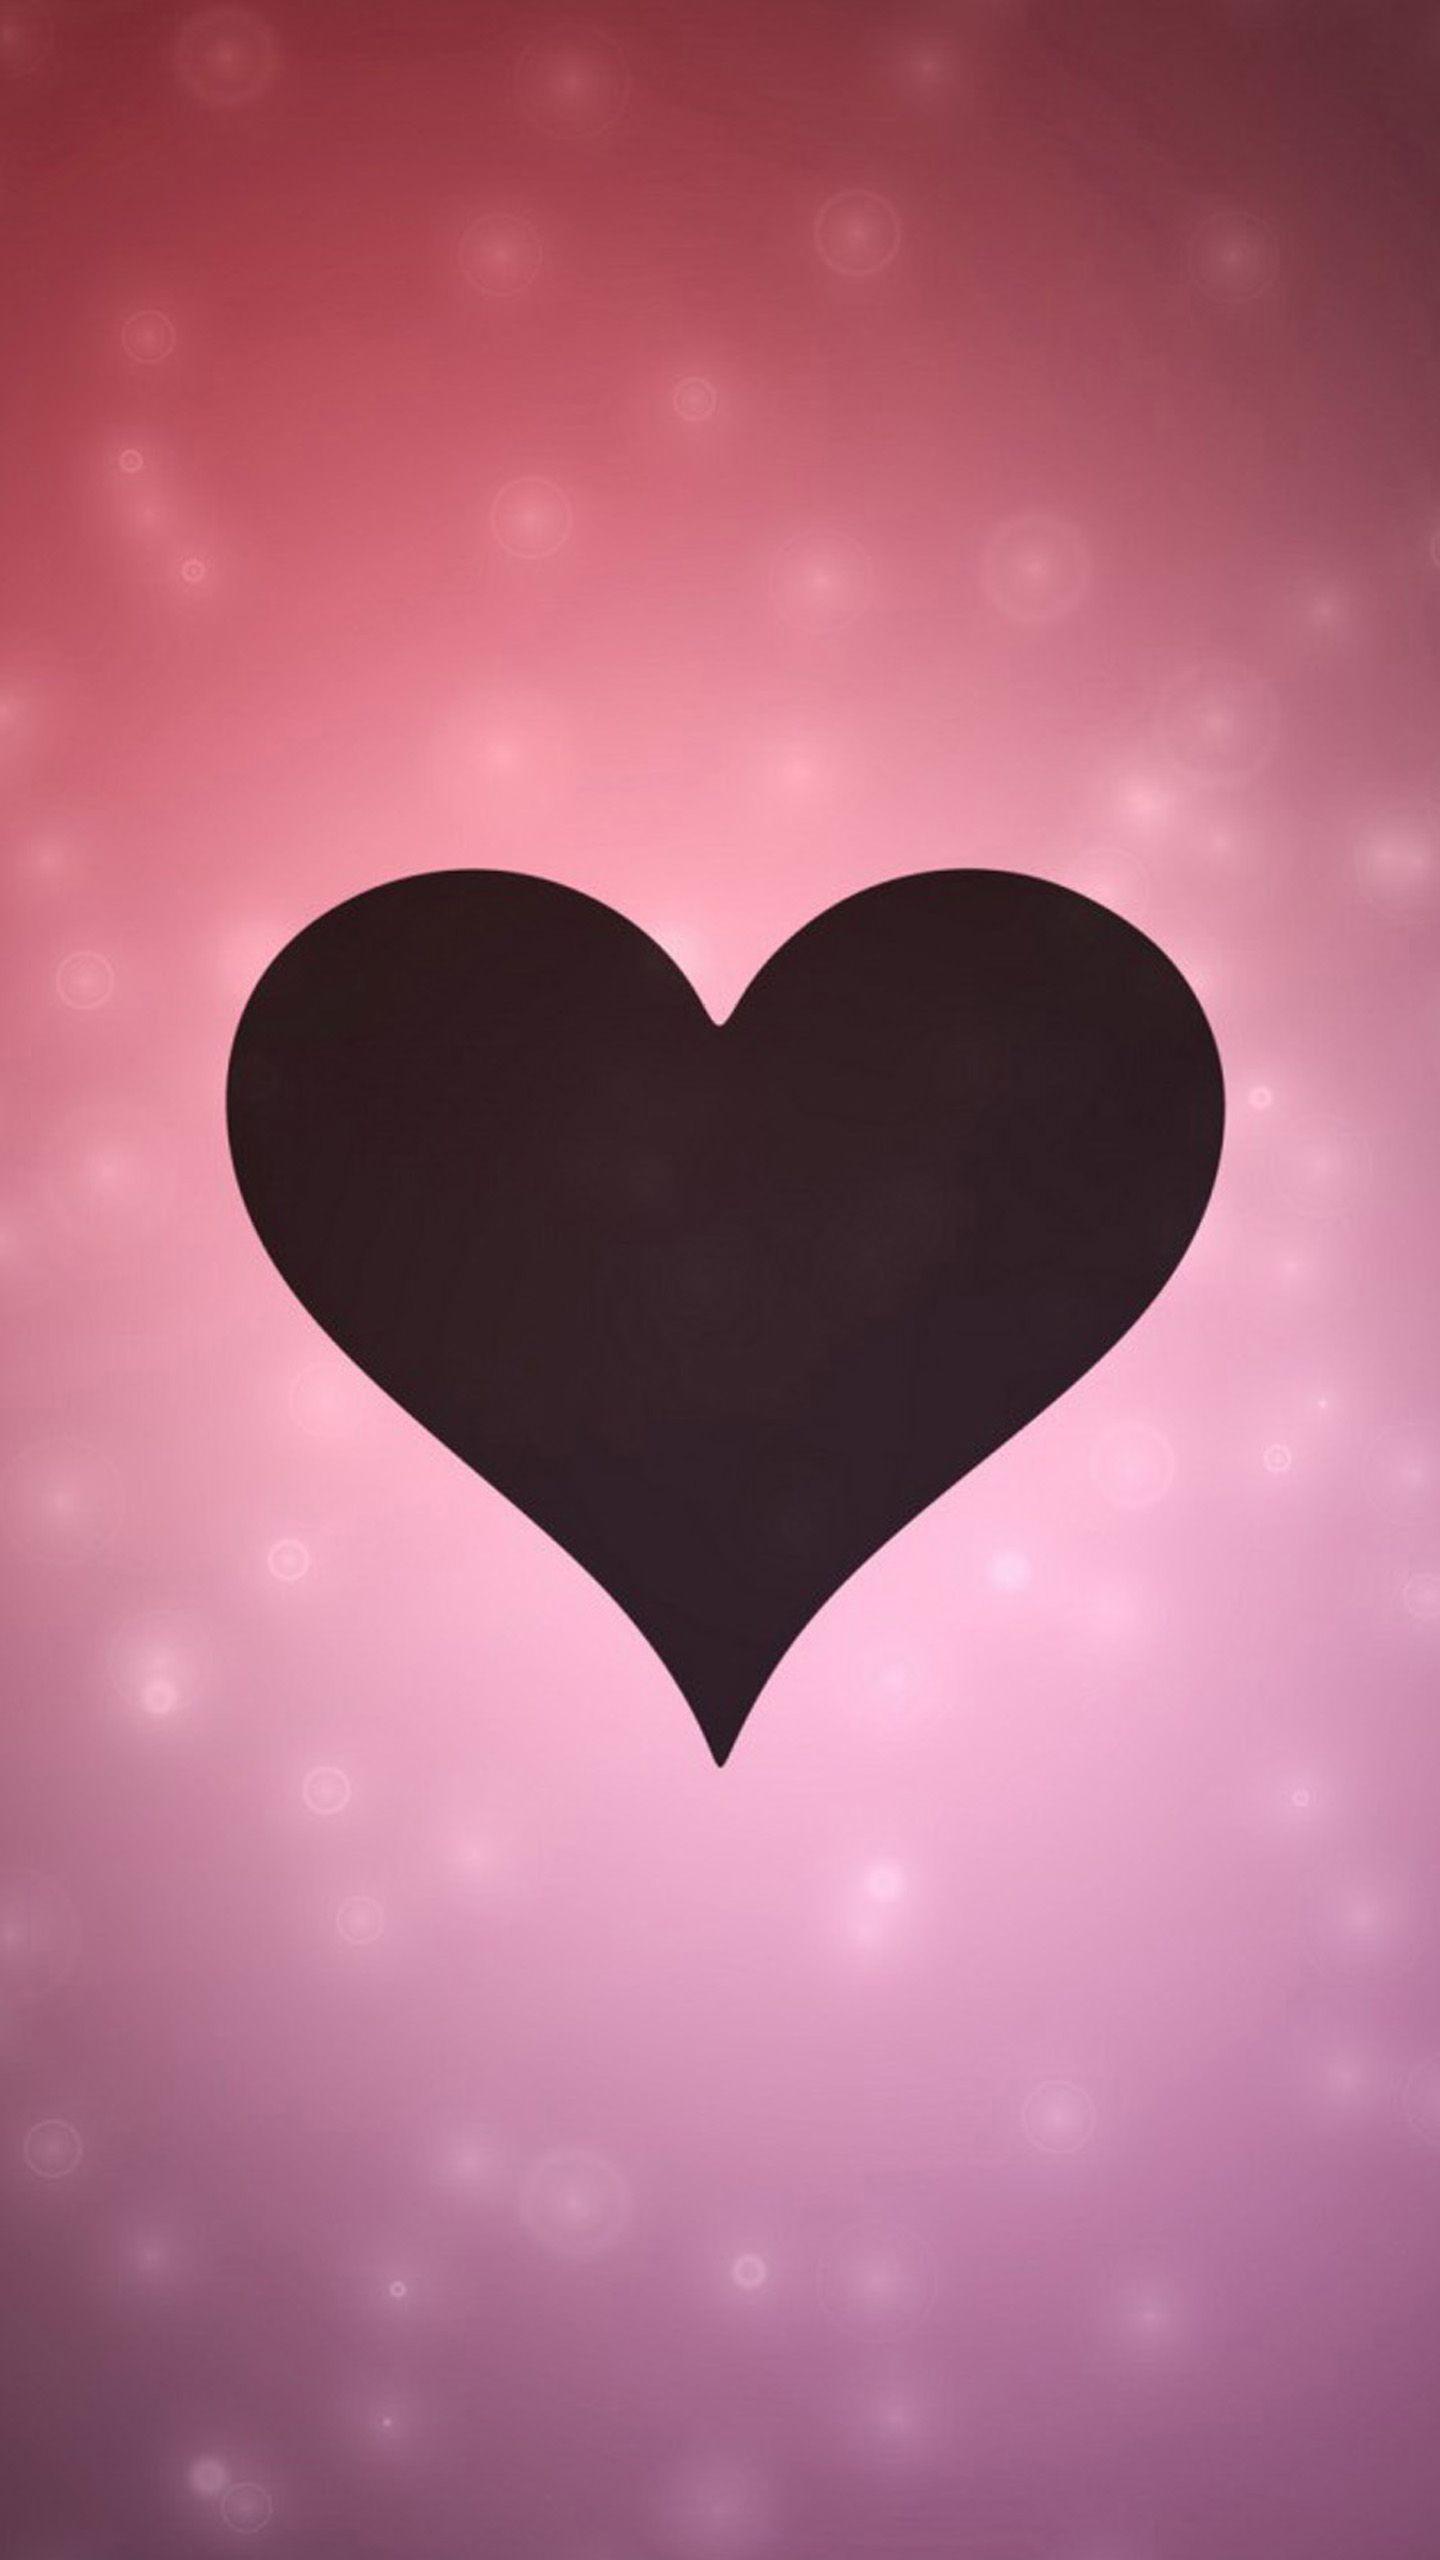 Heart Shilloette Galaxy S7 Wallpaper (1440x2560)